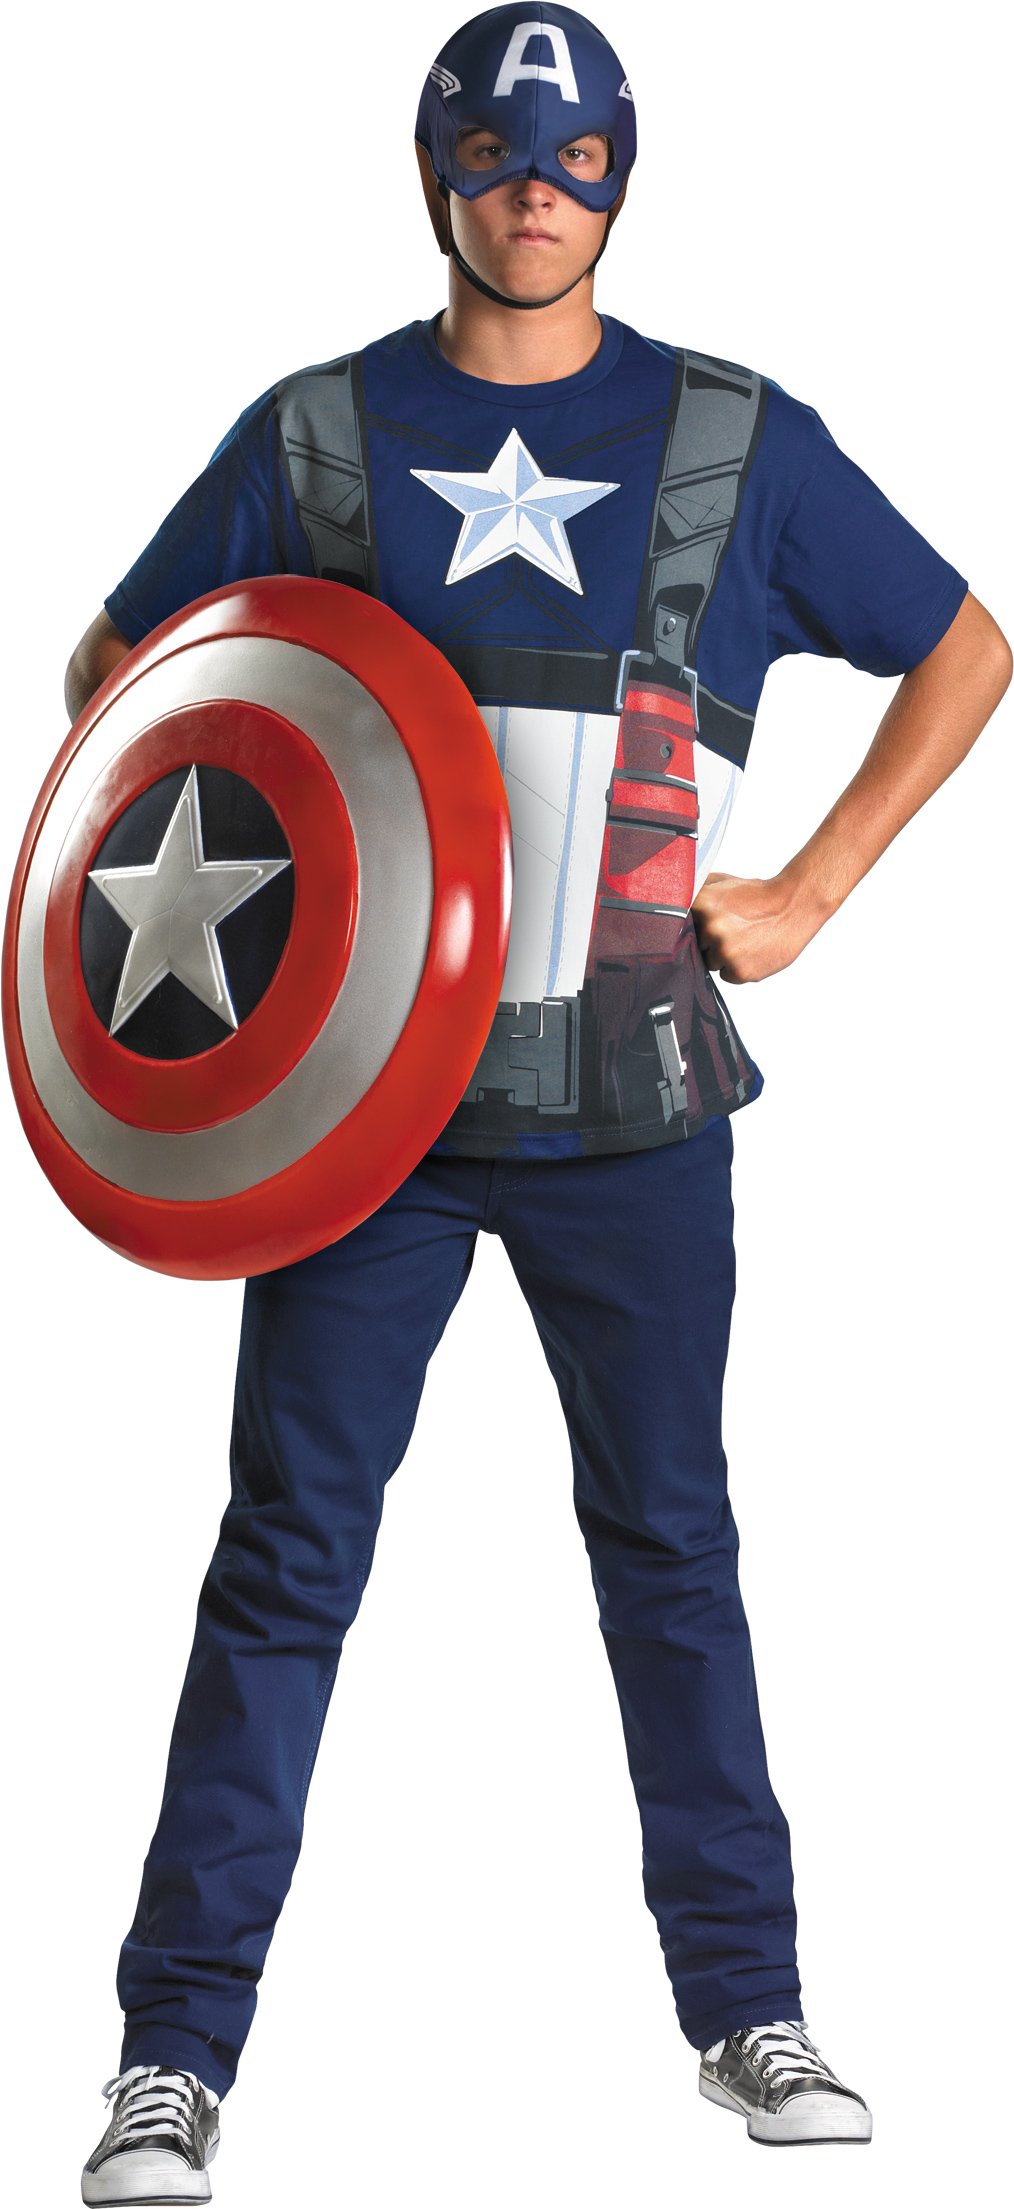 Captain America Adult Costume Kit